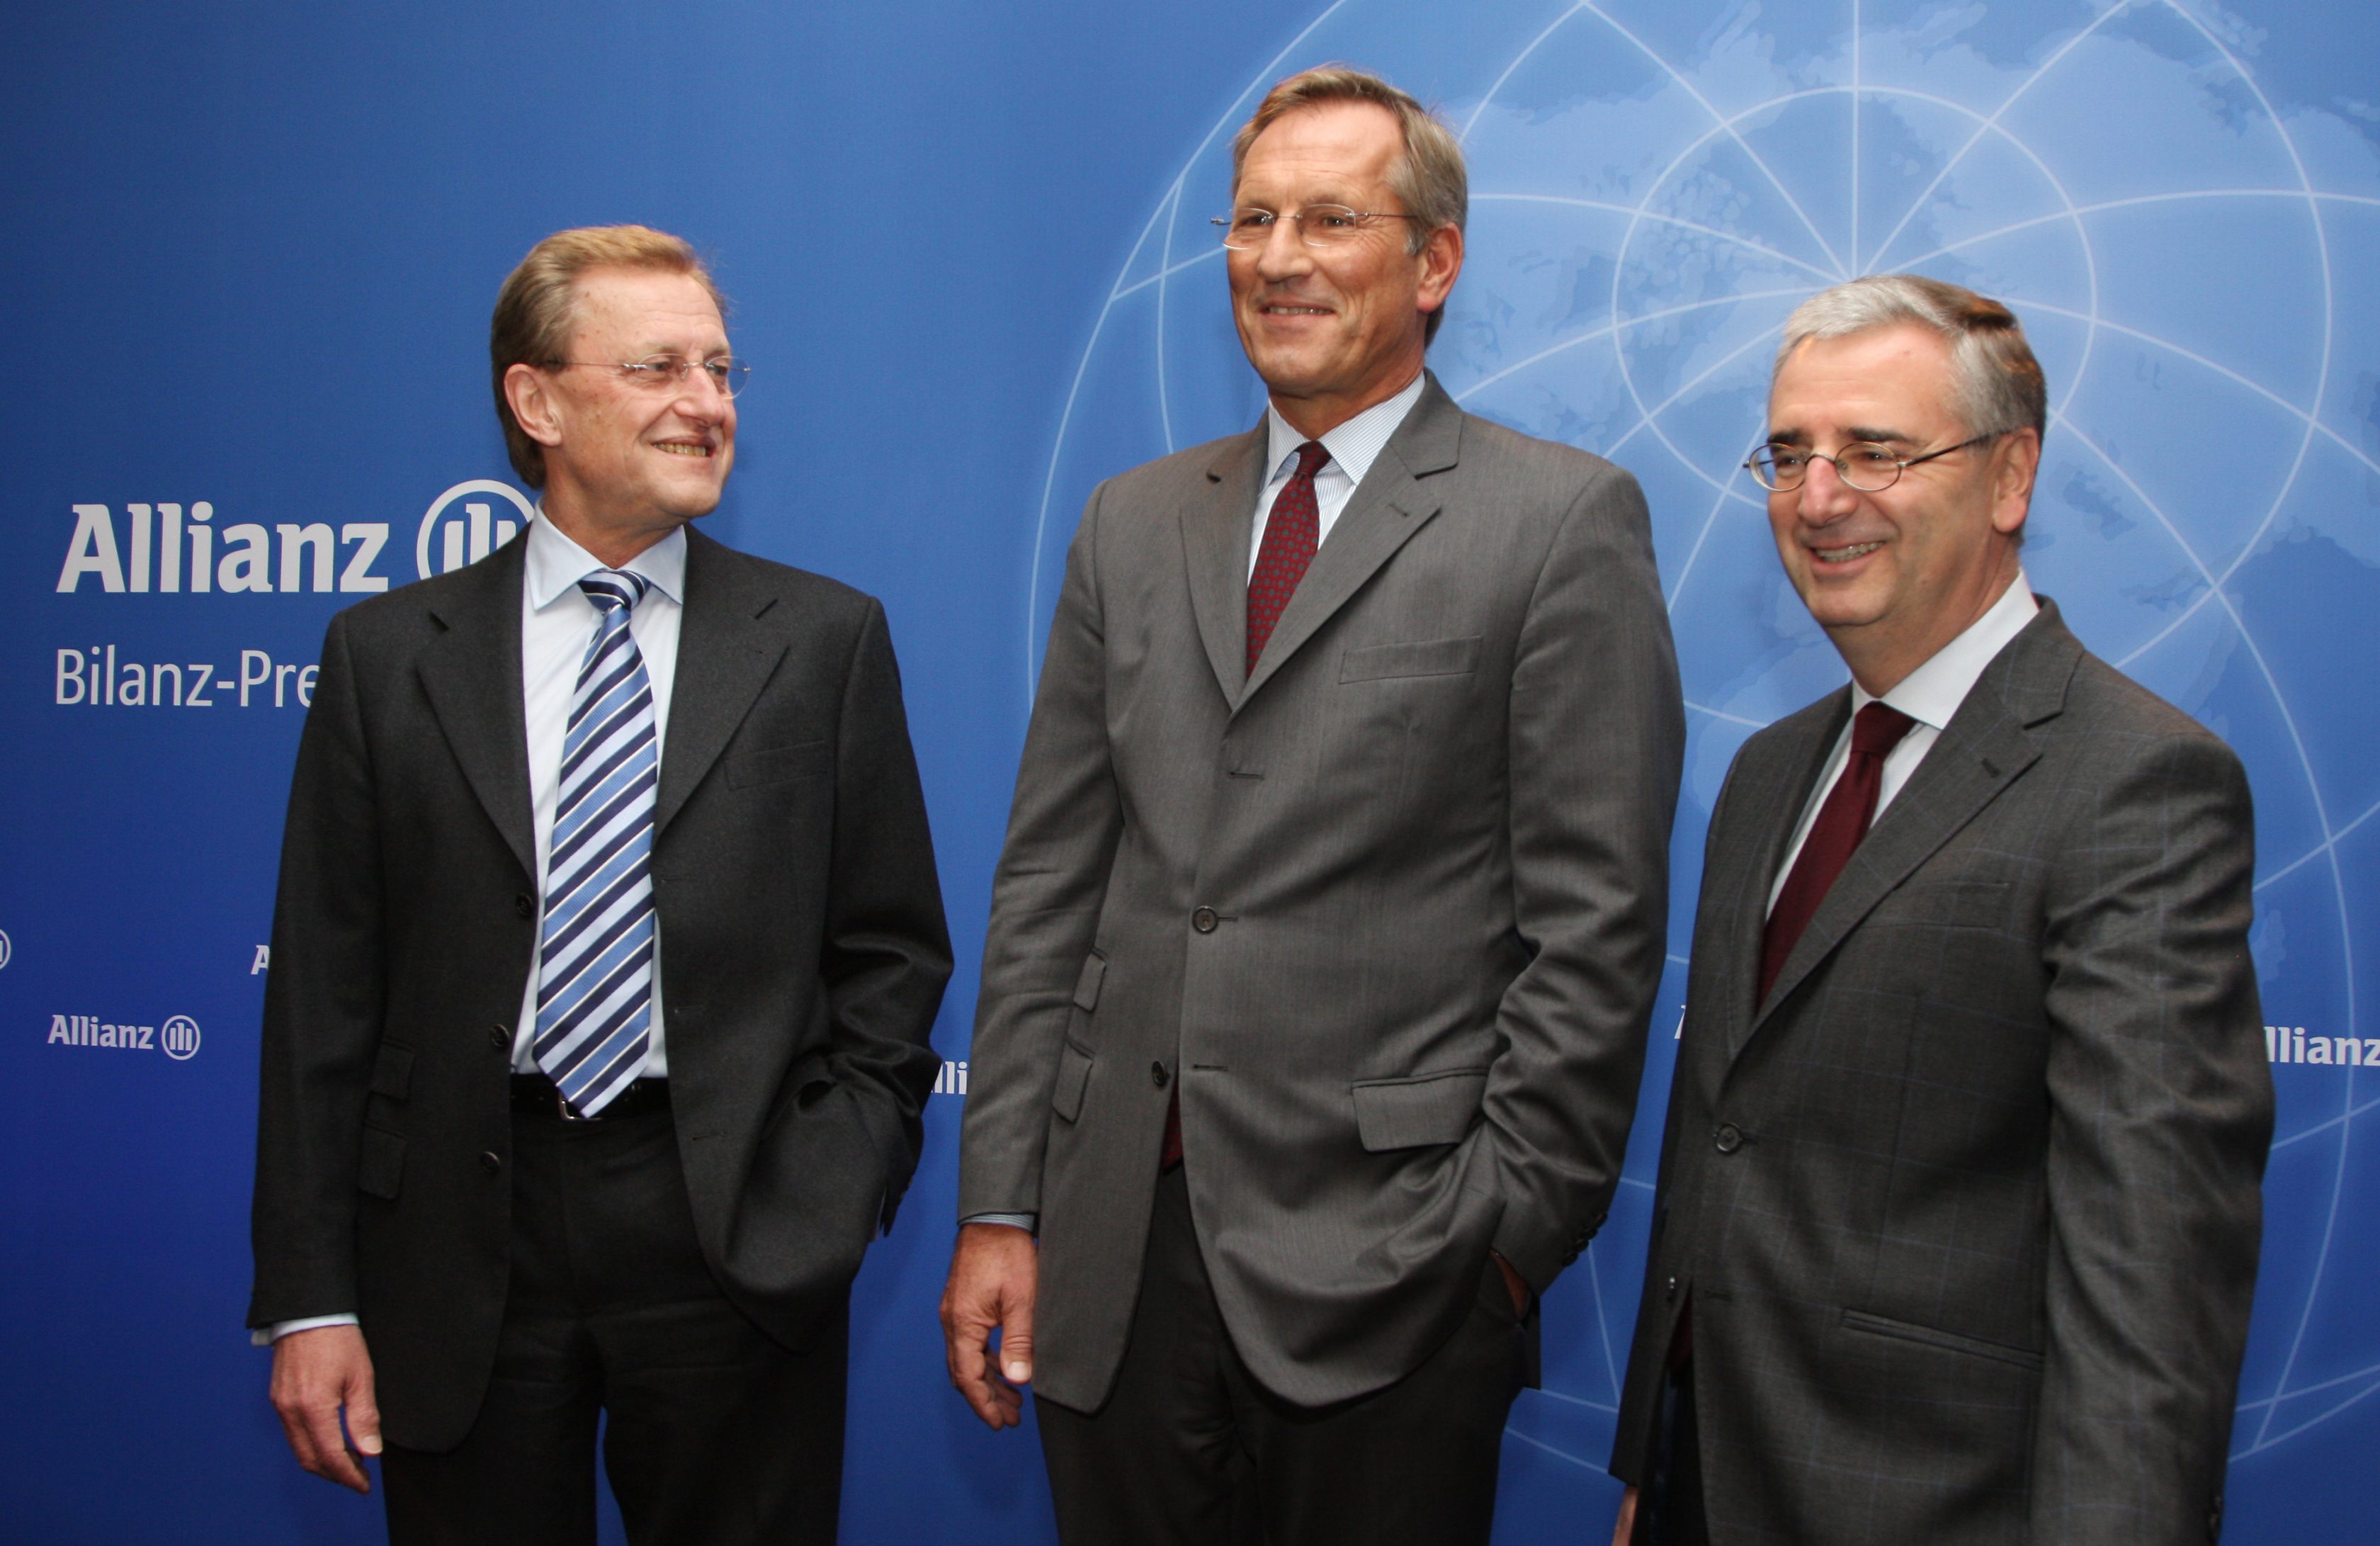 From left: Helmut Perlet, Michael Diekmann, Paul Achleitner